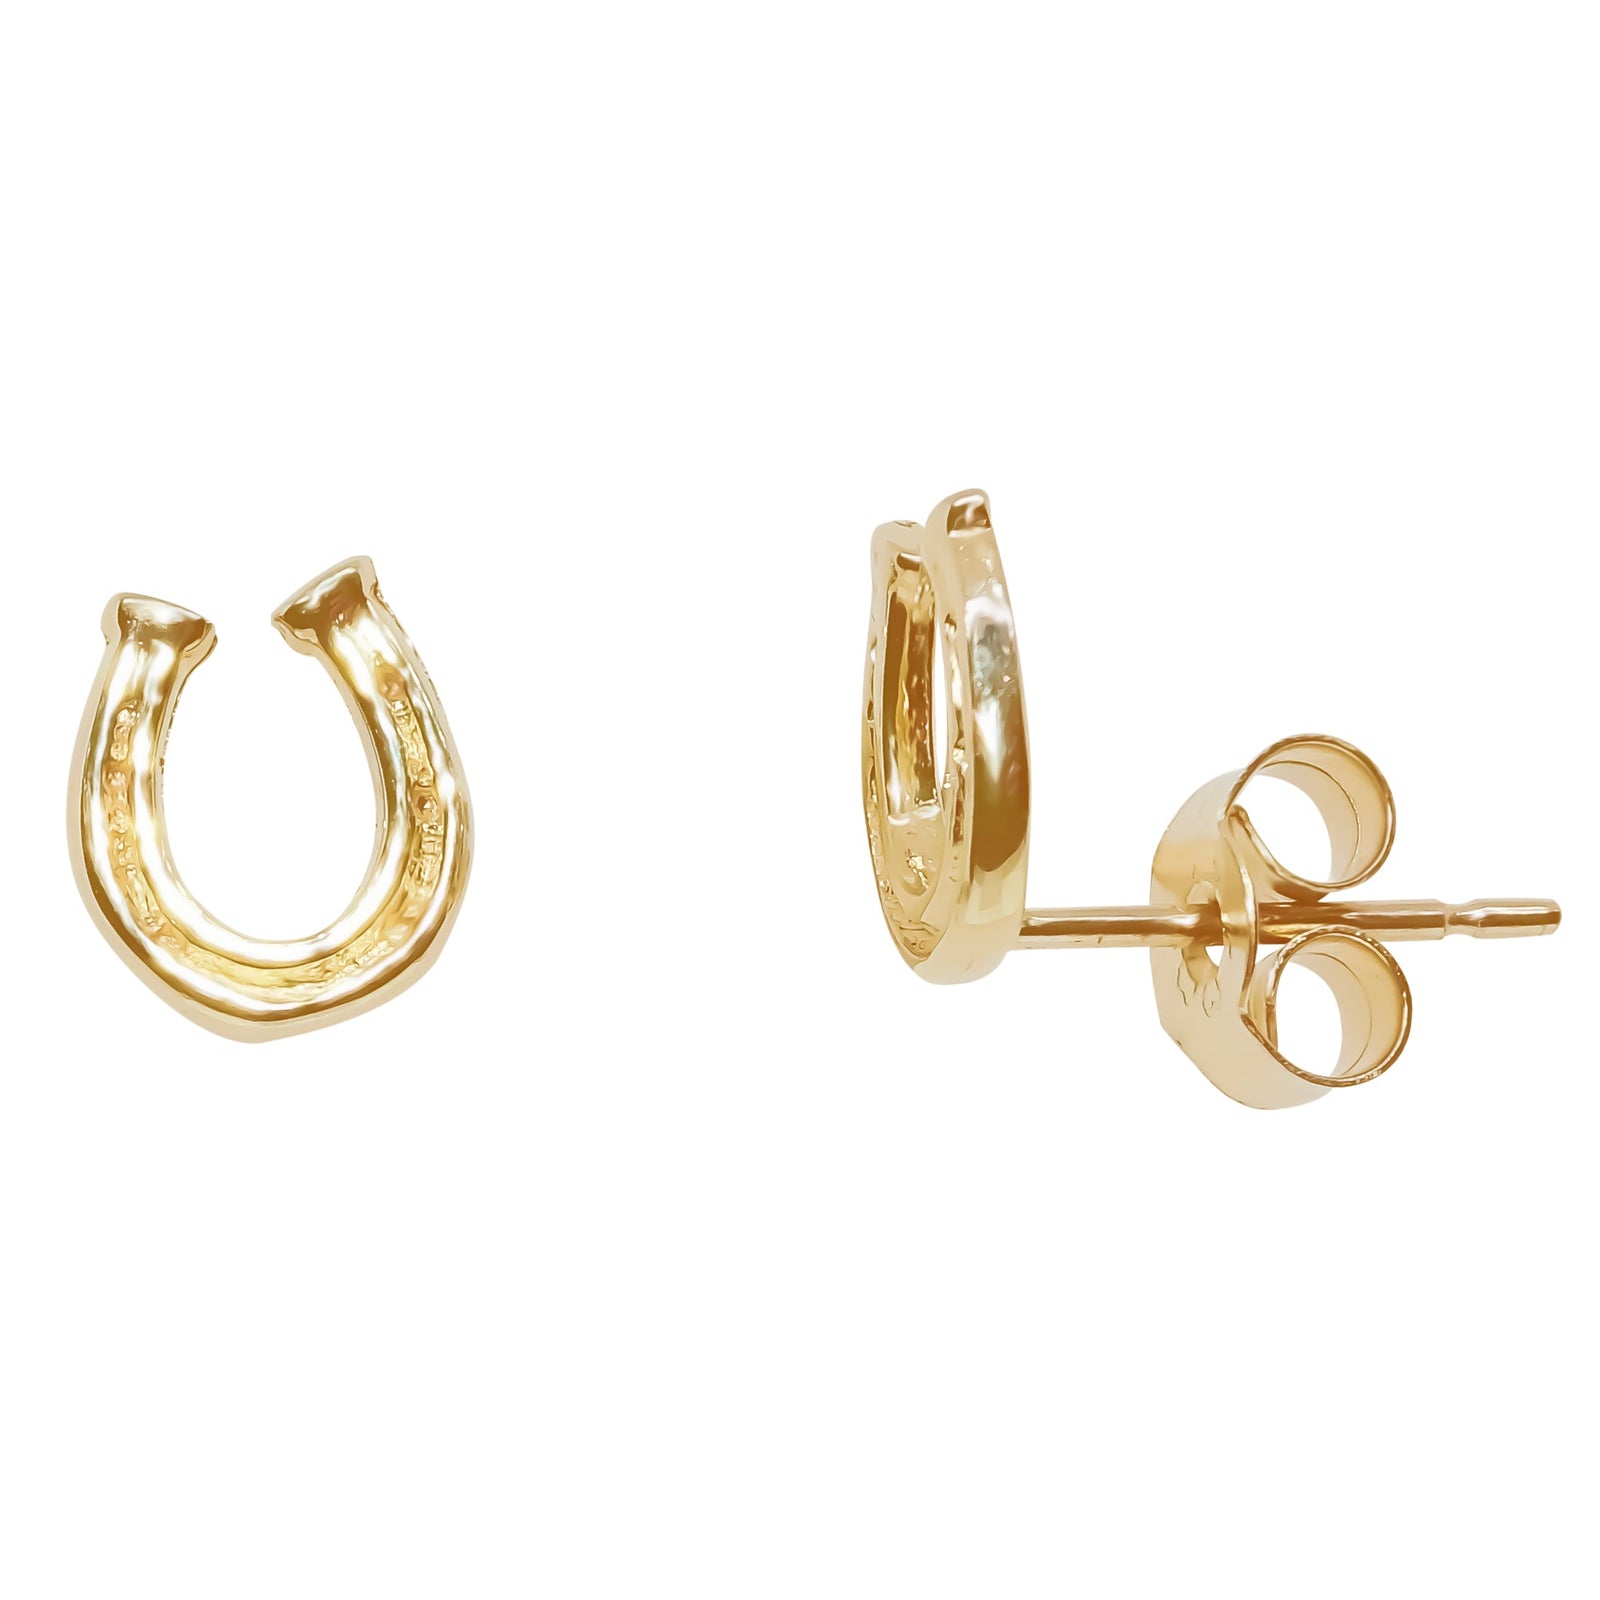 9ct gold horse shoe stud earrings